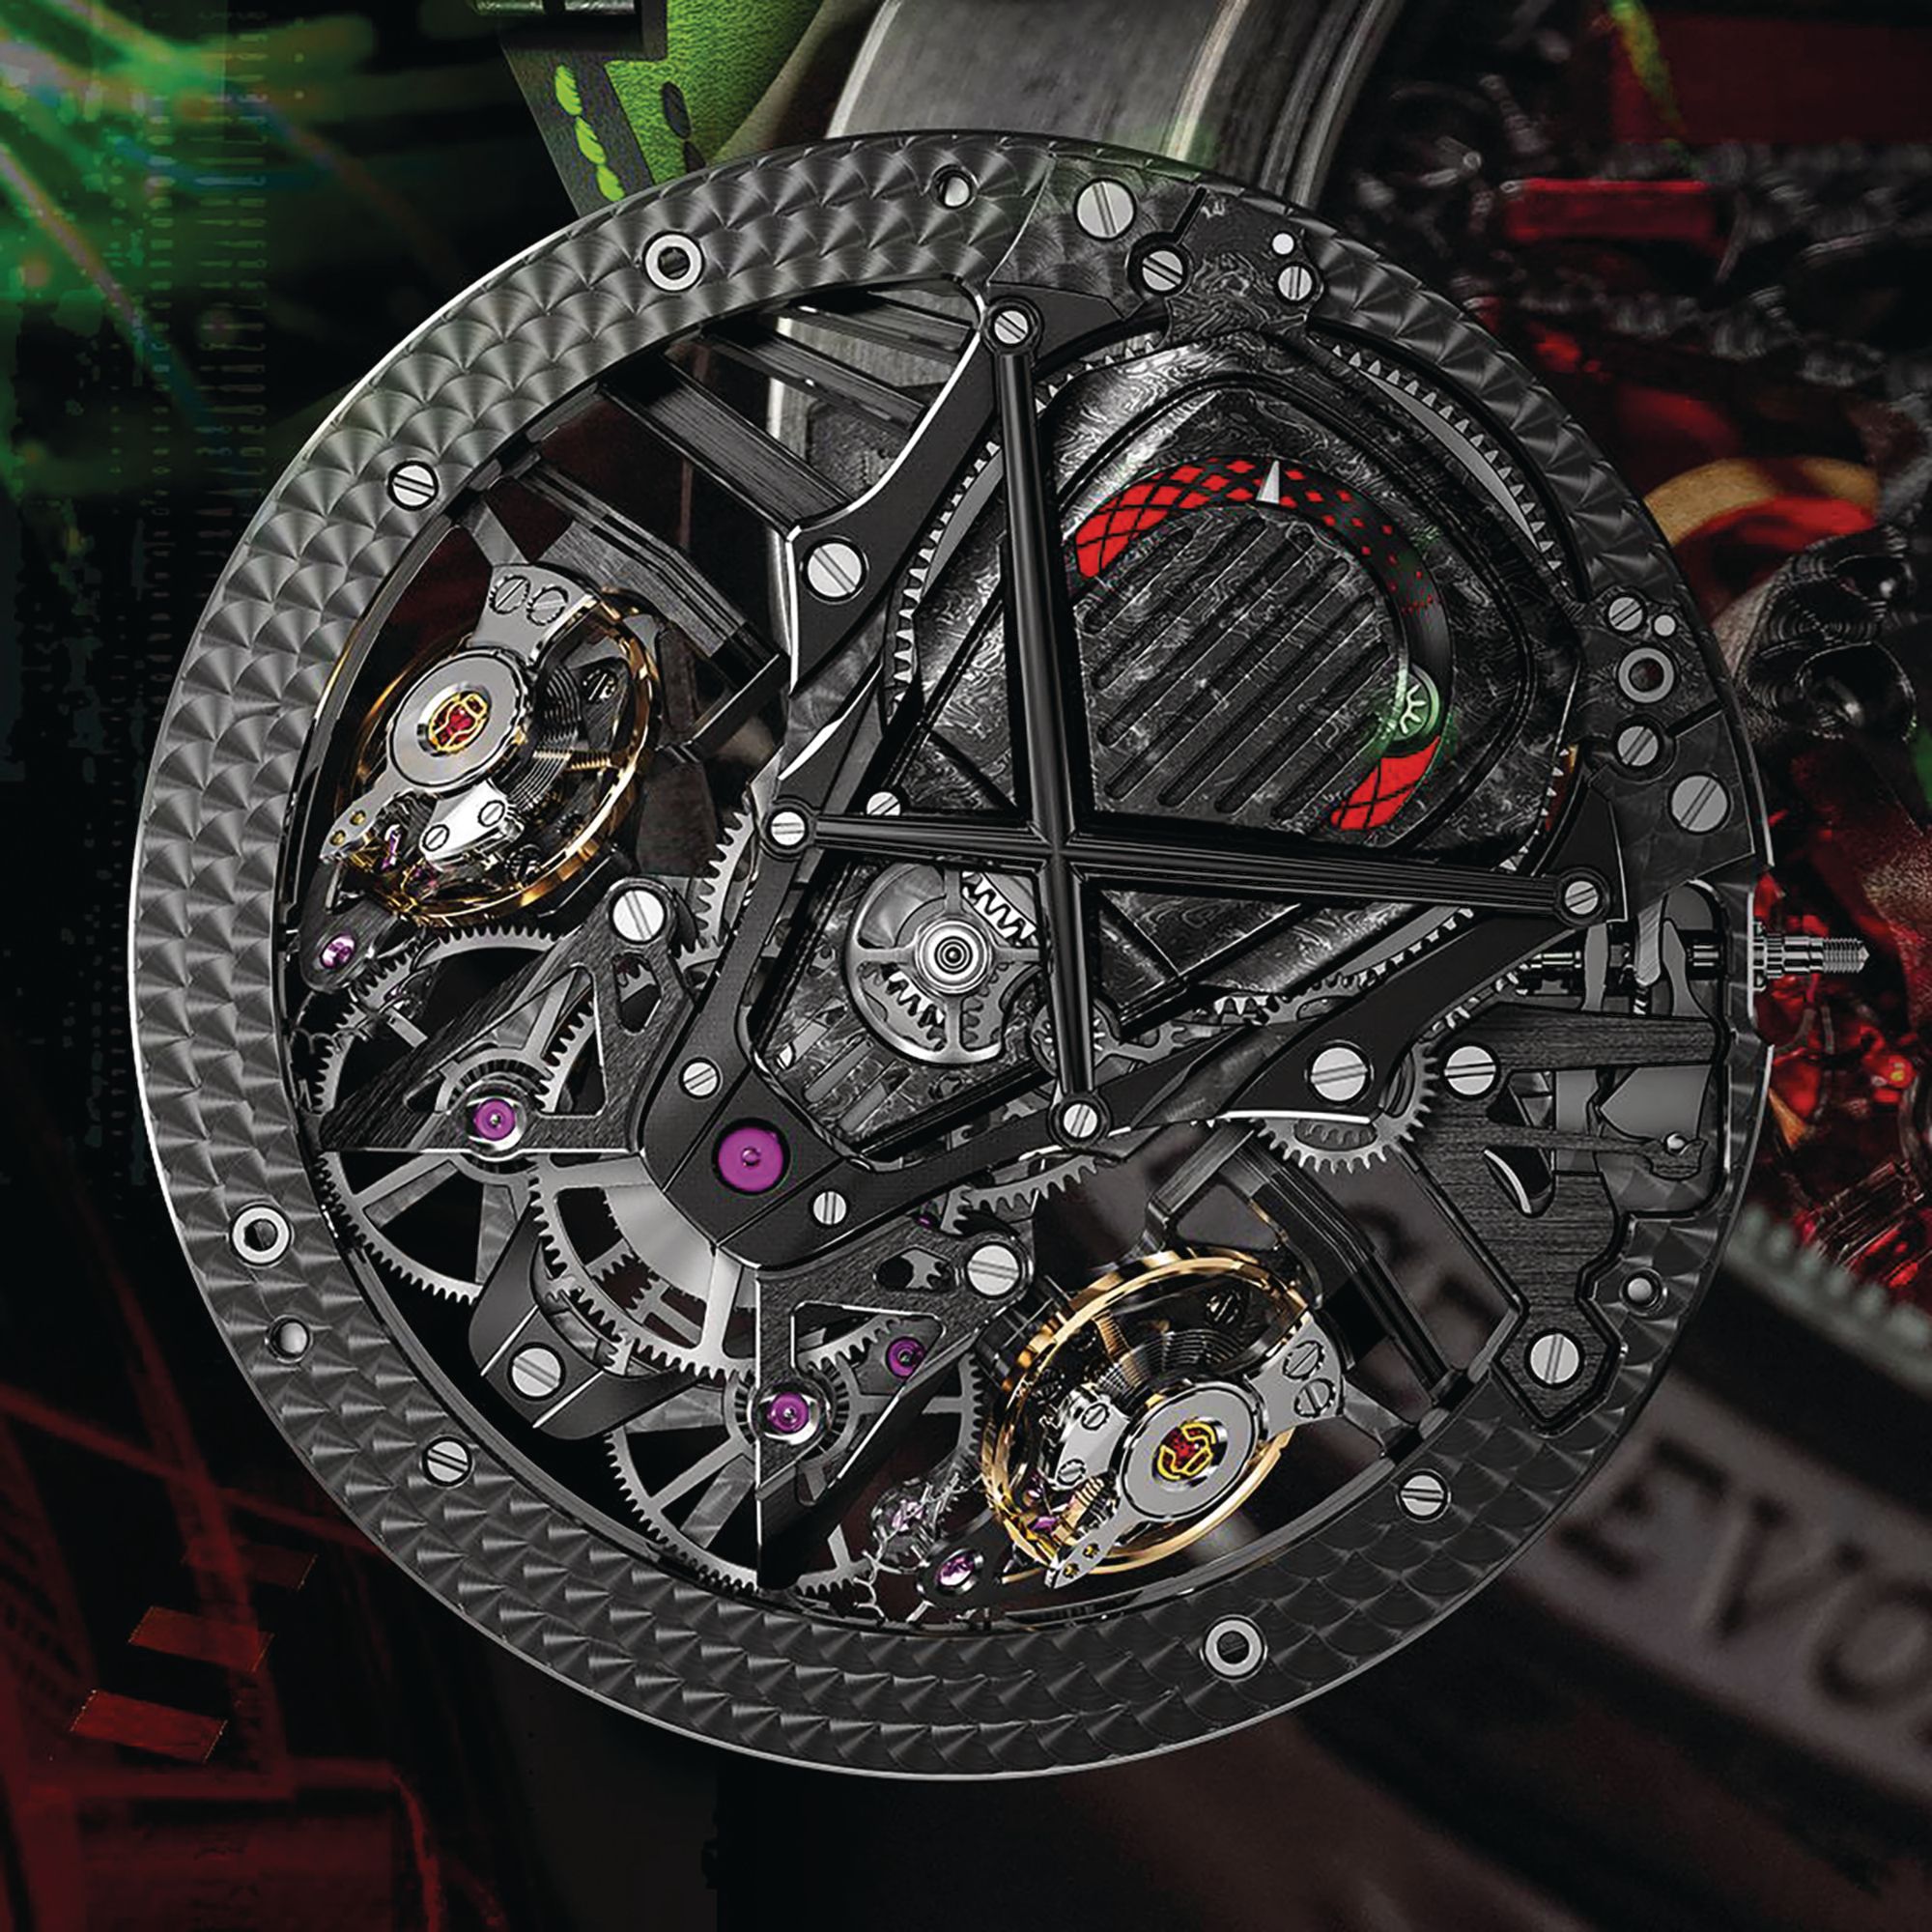 Đồng hồ Excalibur Aventador S của Roger Dubuis Tatler 